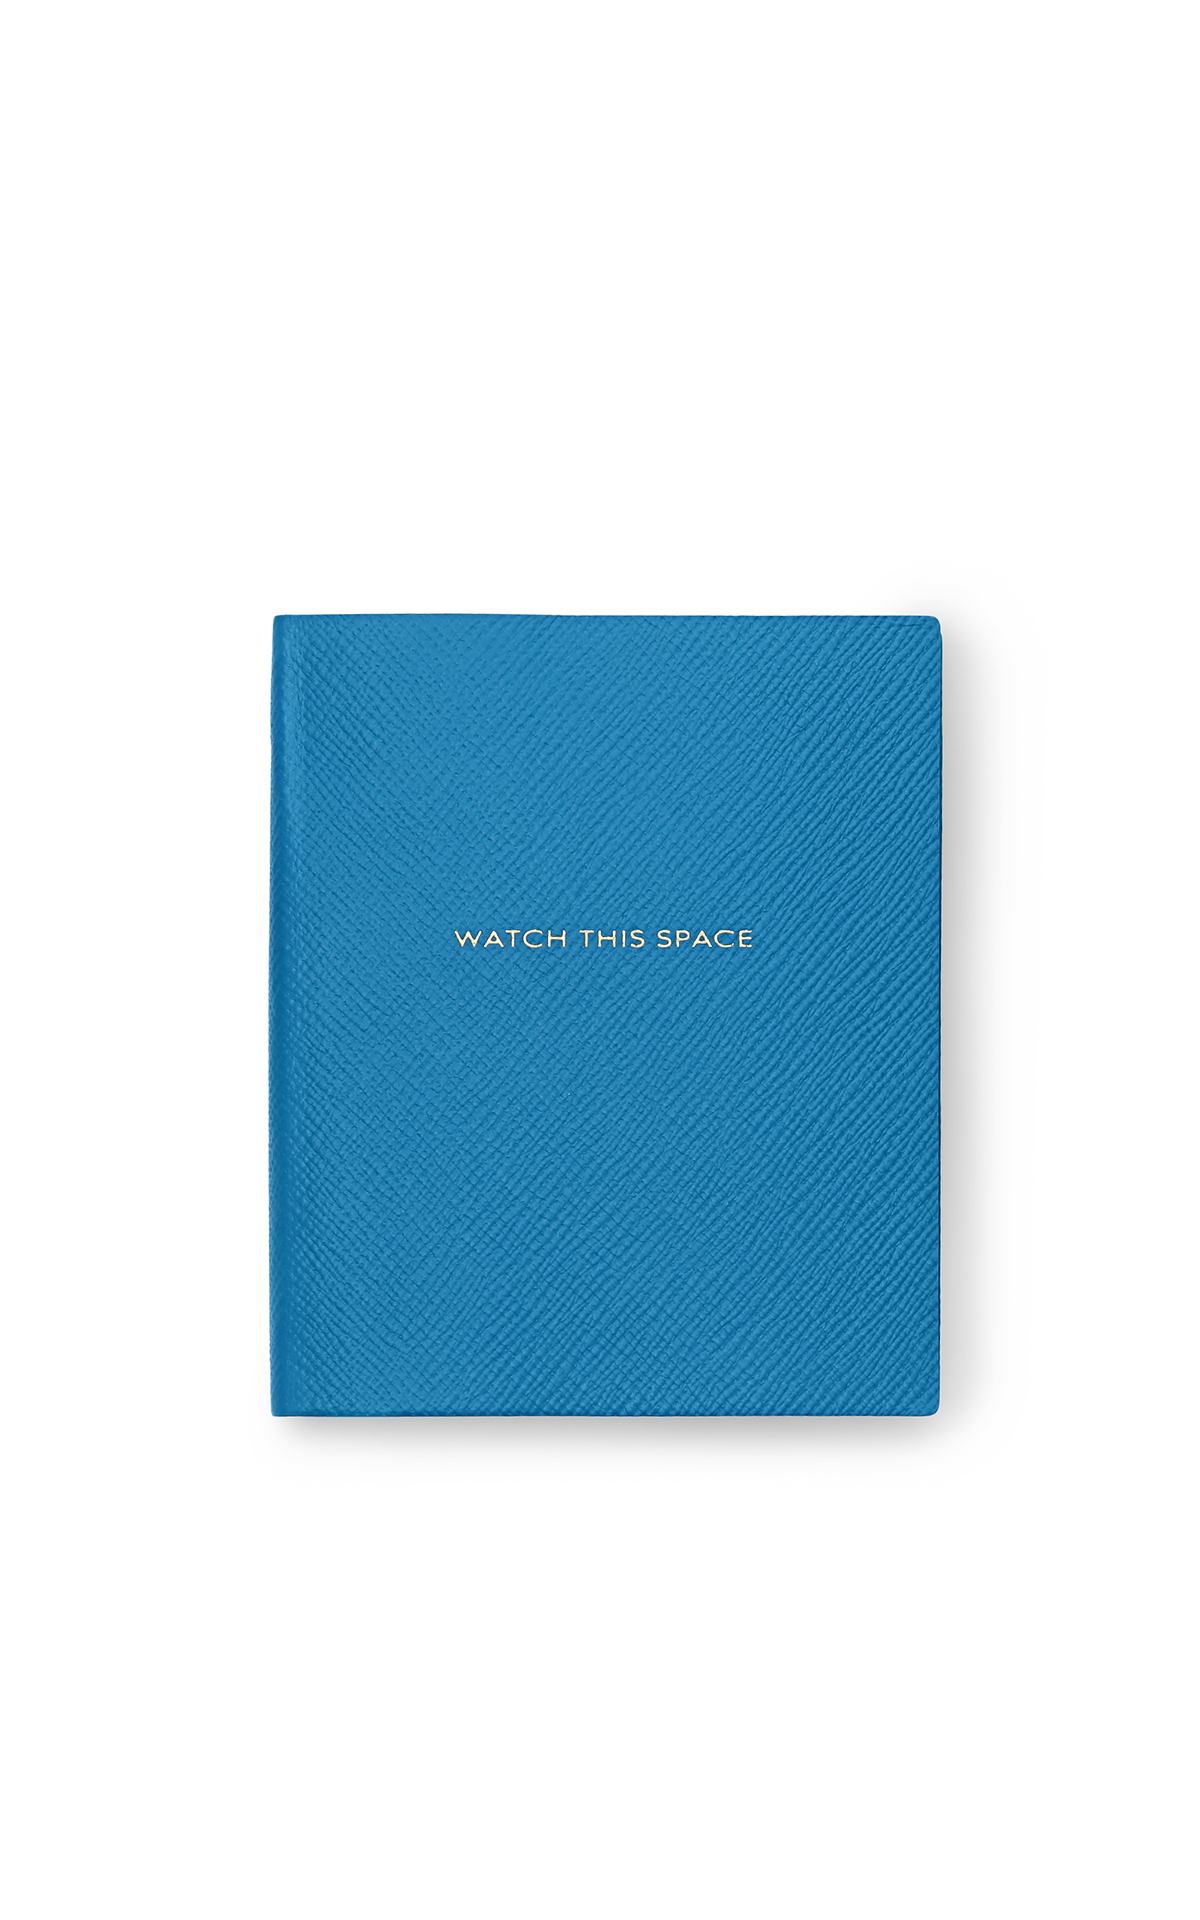 Smythson Premier watch this space notebook azure from Bicester Village